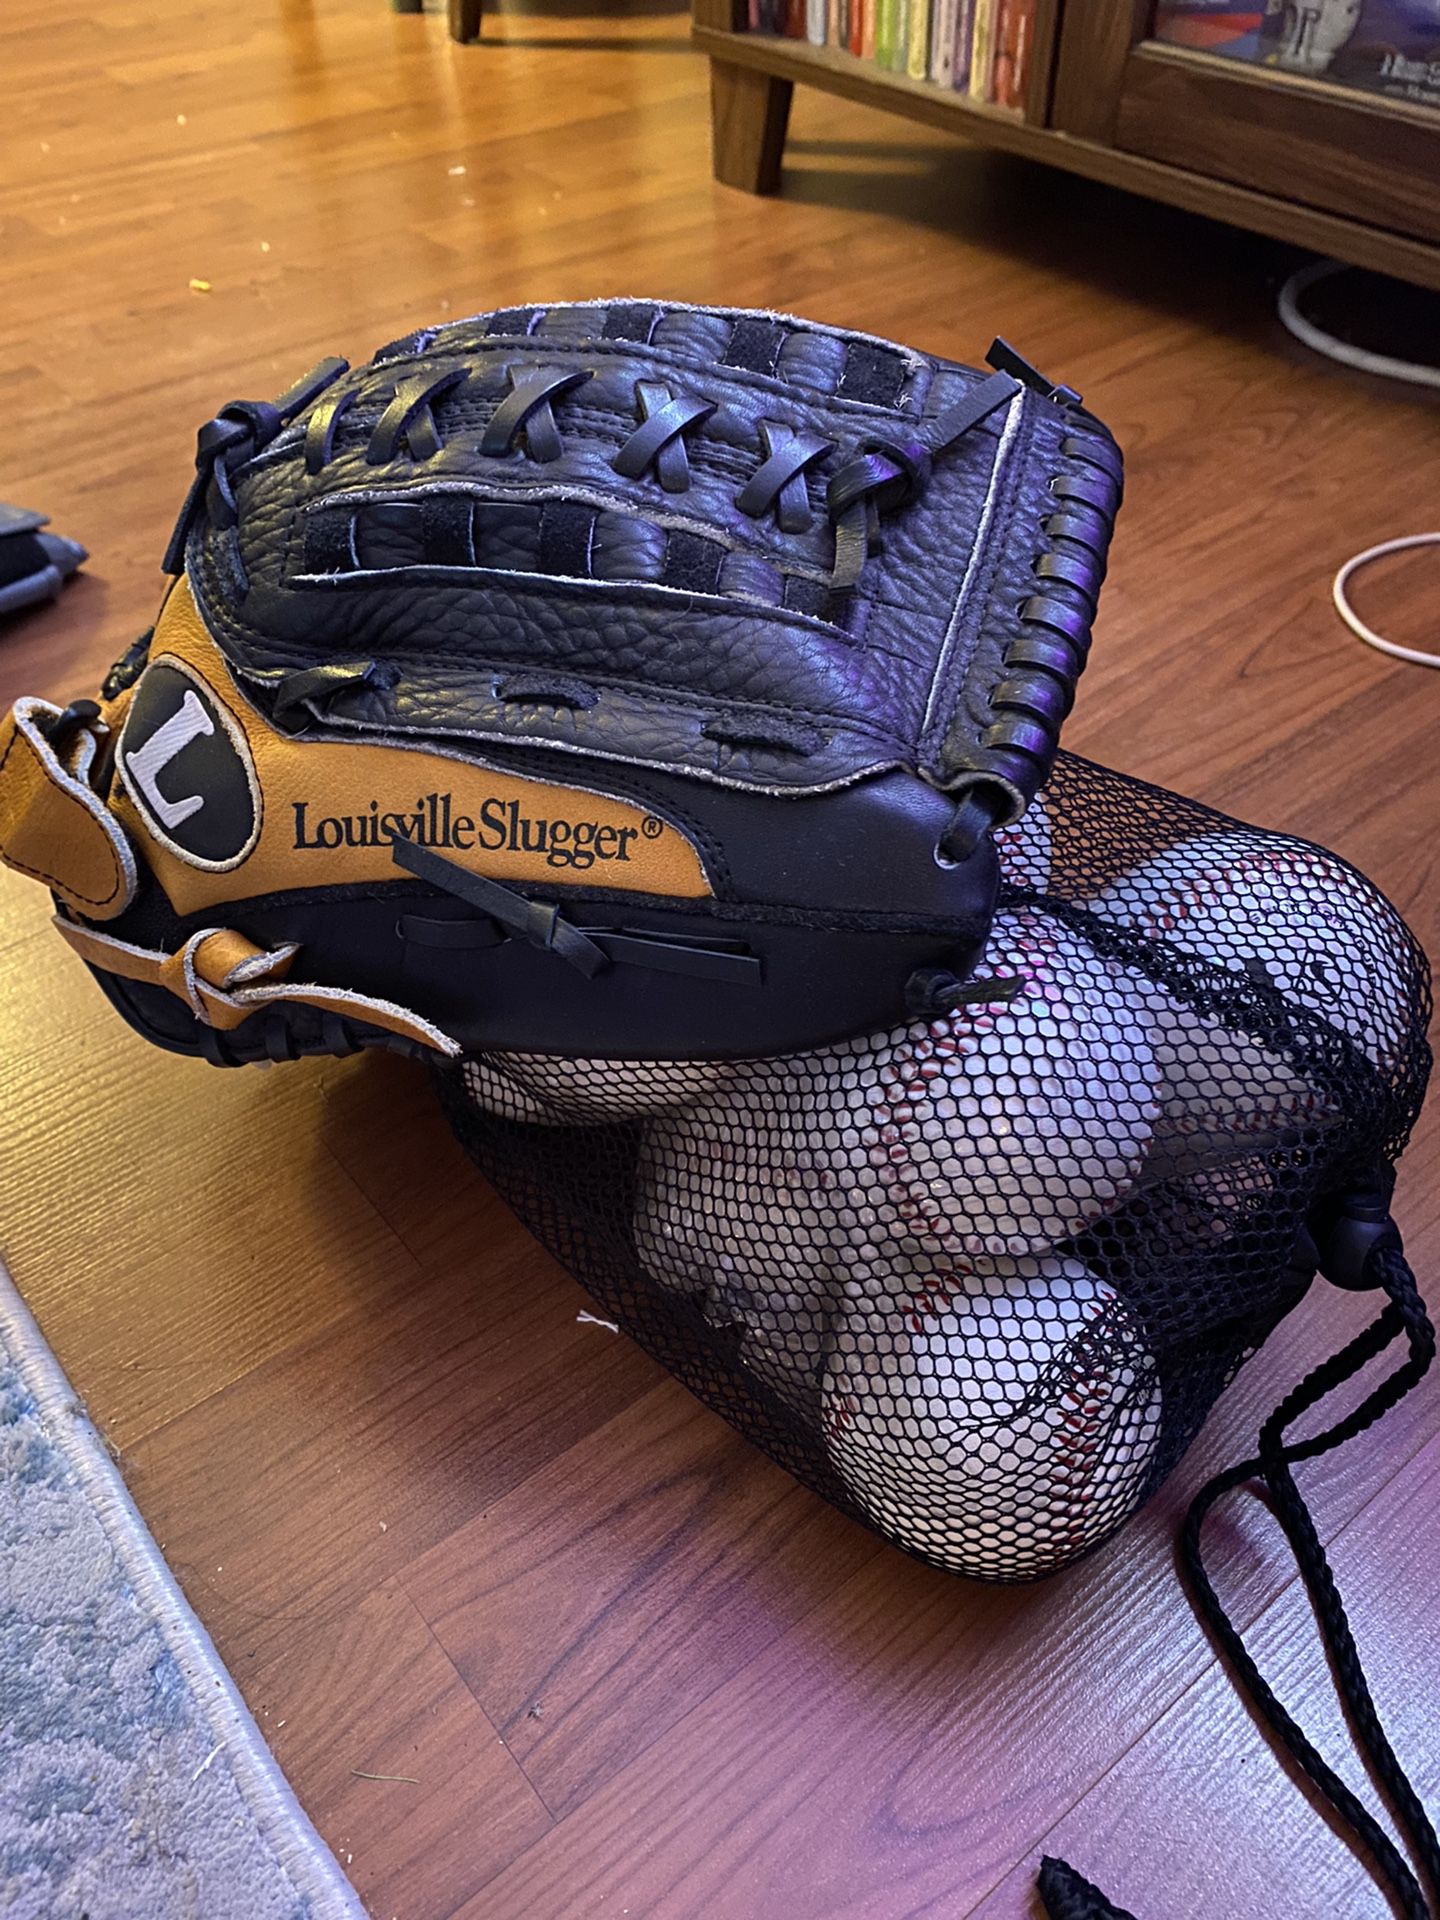 Never Used Baseball Glove And Ballsack 